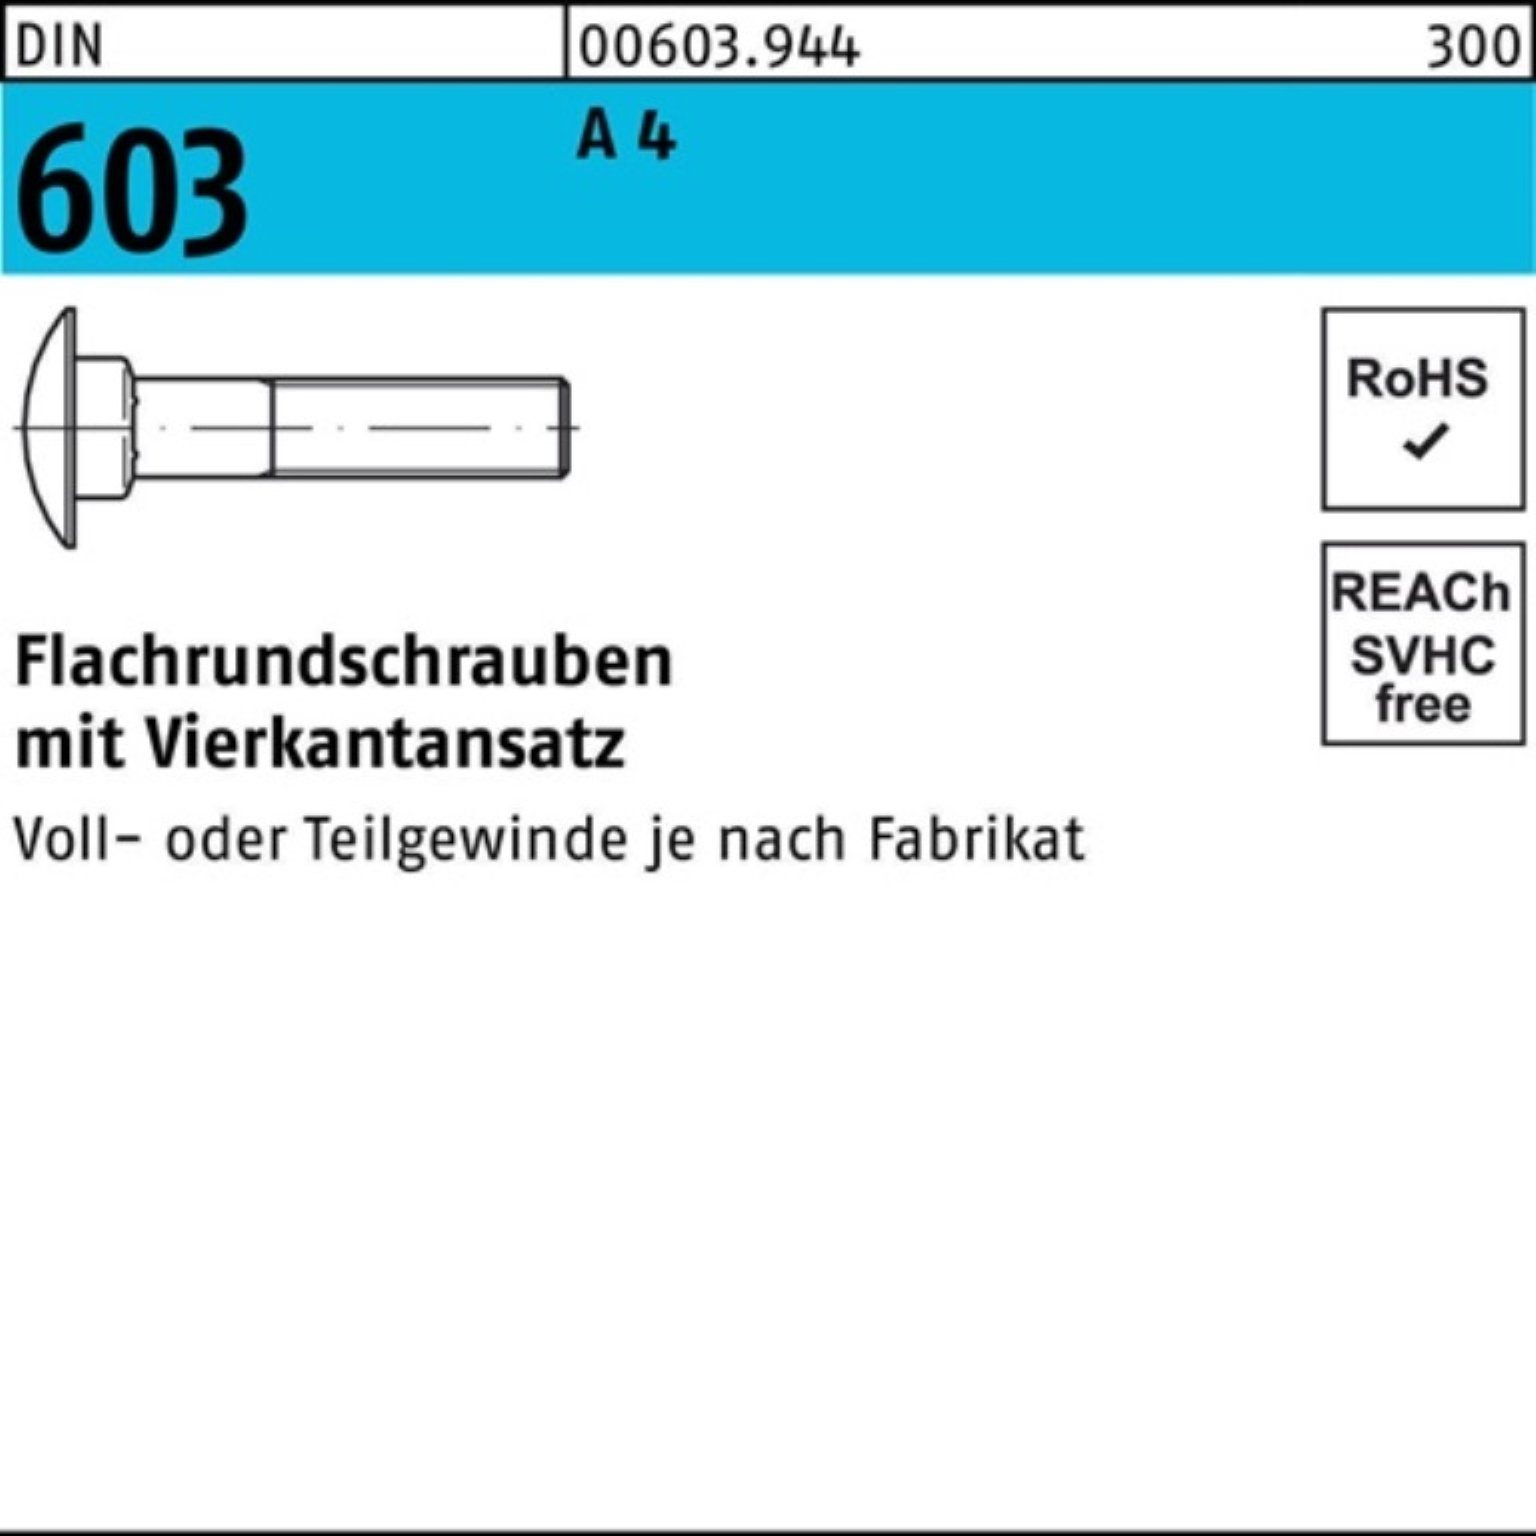 St 603 Pack Flachrundschraube 100er Reyher 4 A 35 M10x Vierkantansatz DIN 10 Schraube